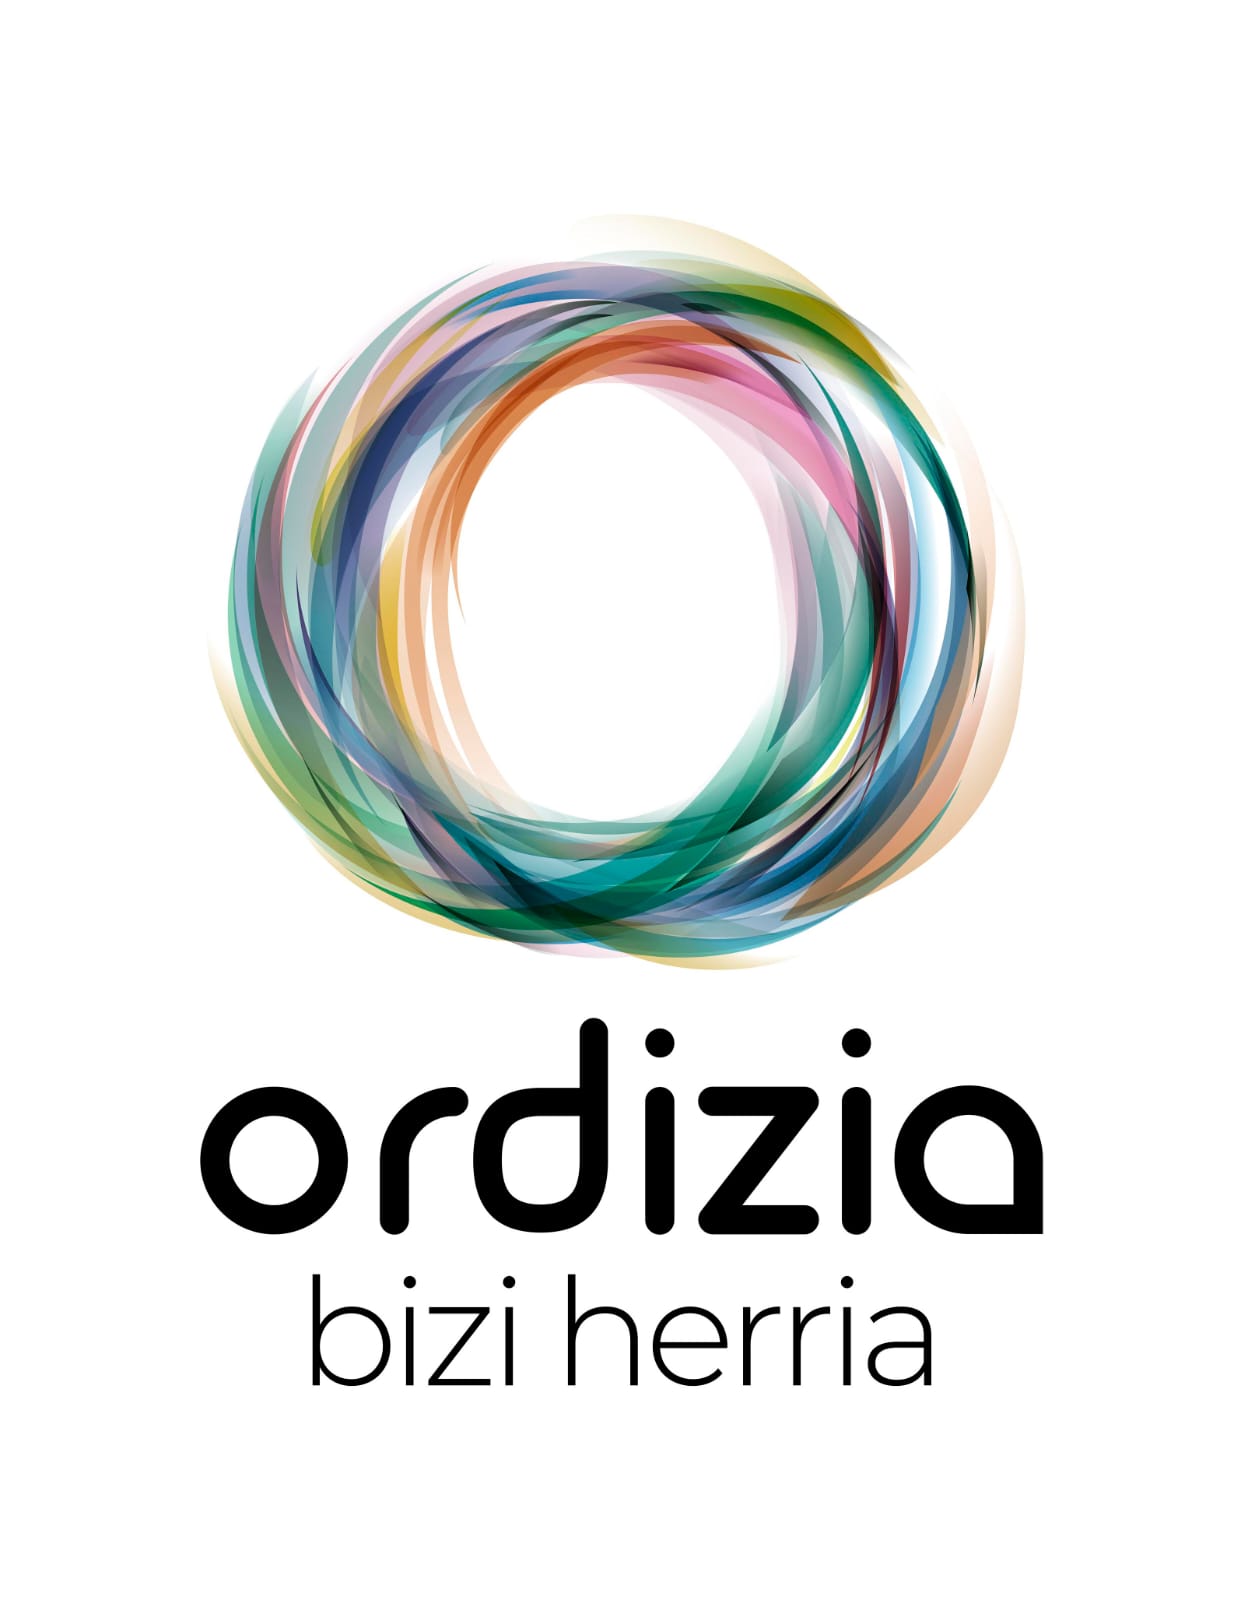 Ordizia estrena nueva marca: Ordizia, Bizi herria